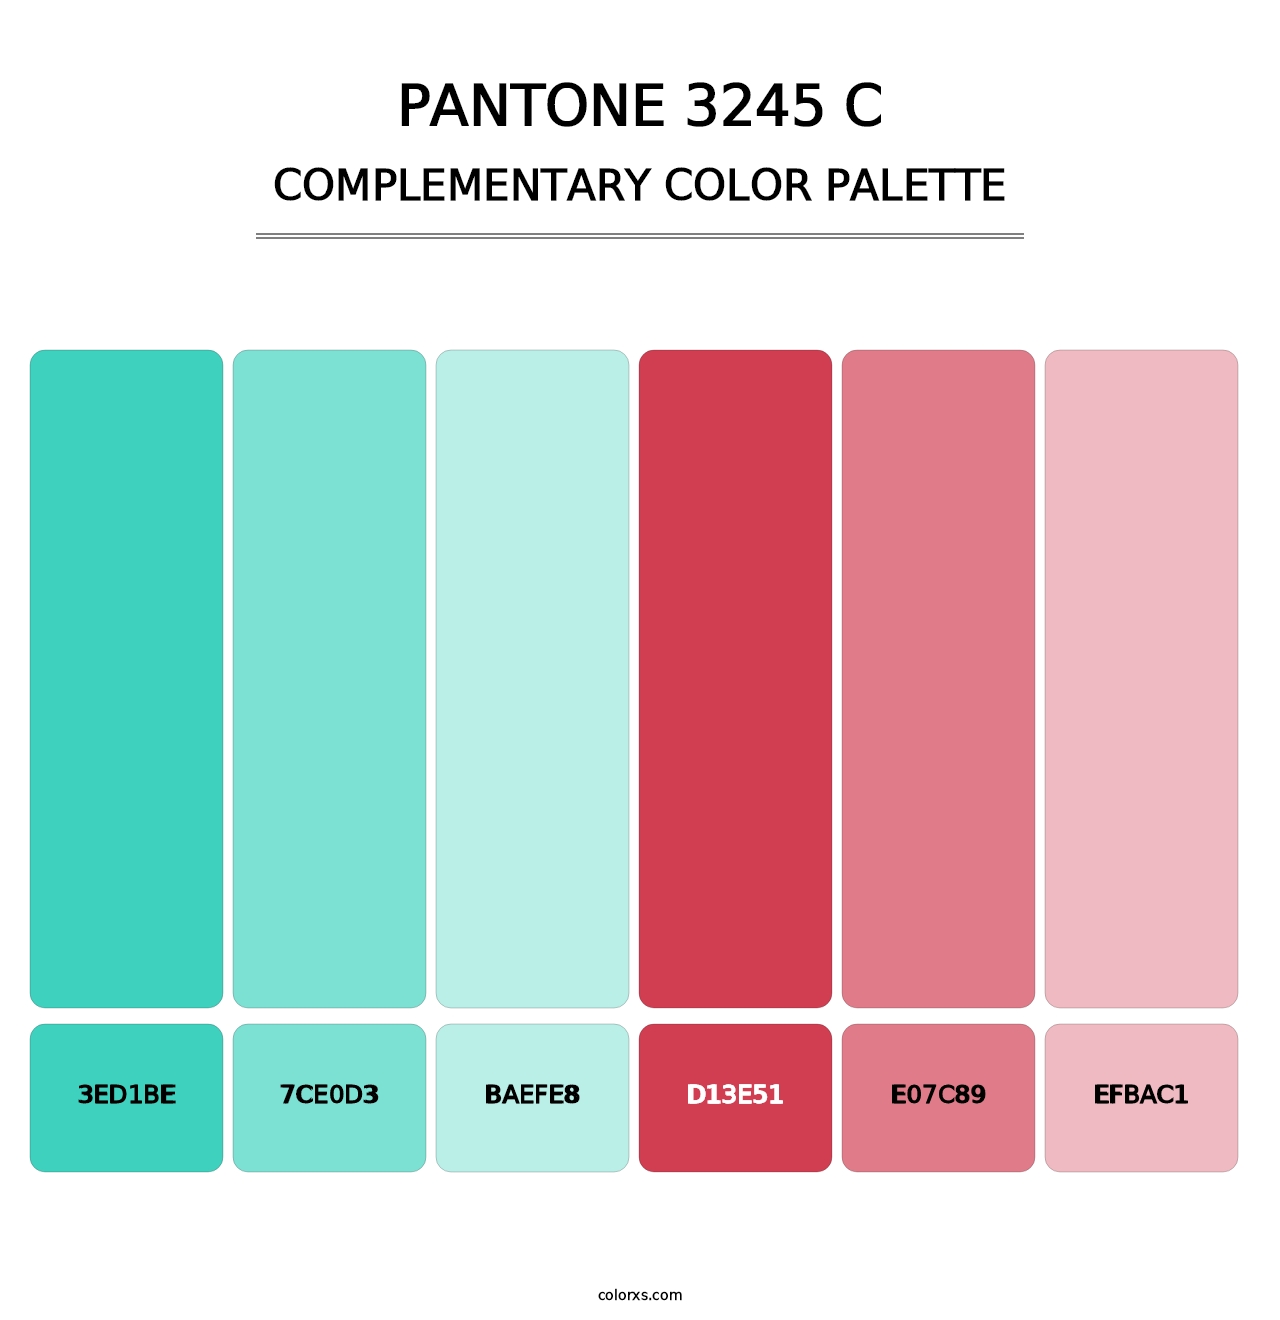 PANTONE 3245 C - Complementary Color Palette